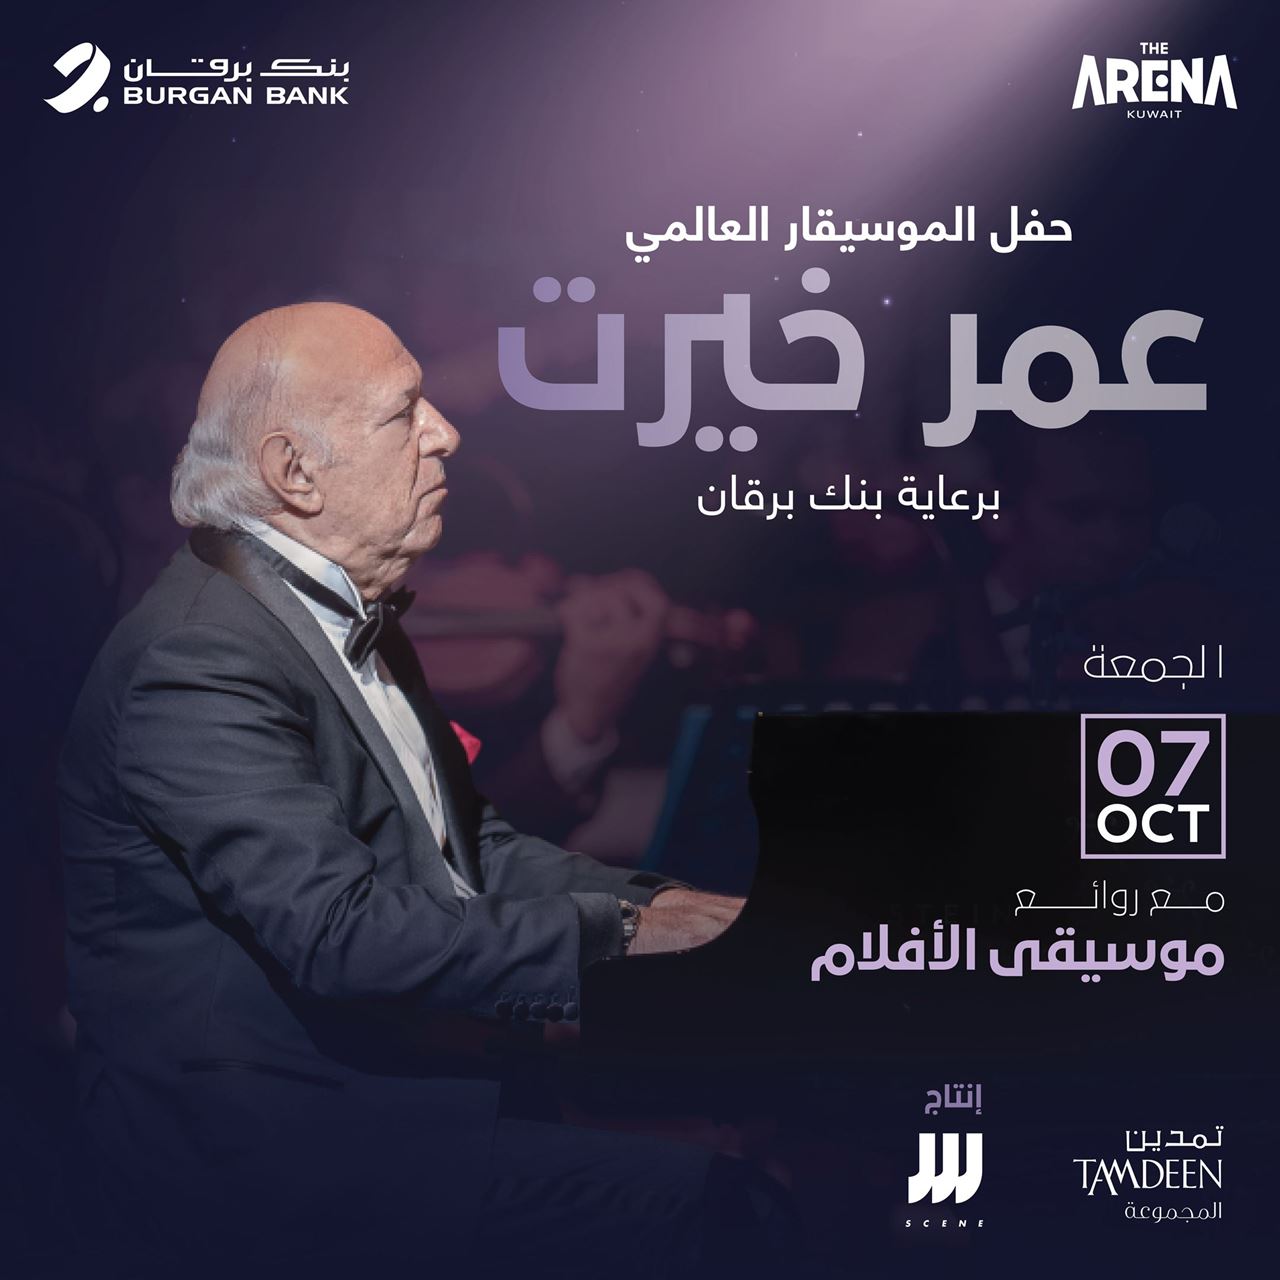 Burgan Bank Sponsors Omar Khairat’s Concert at The Arena Kuwait